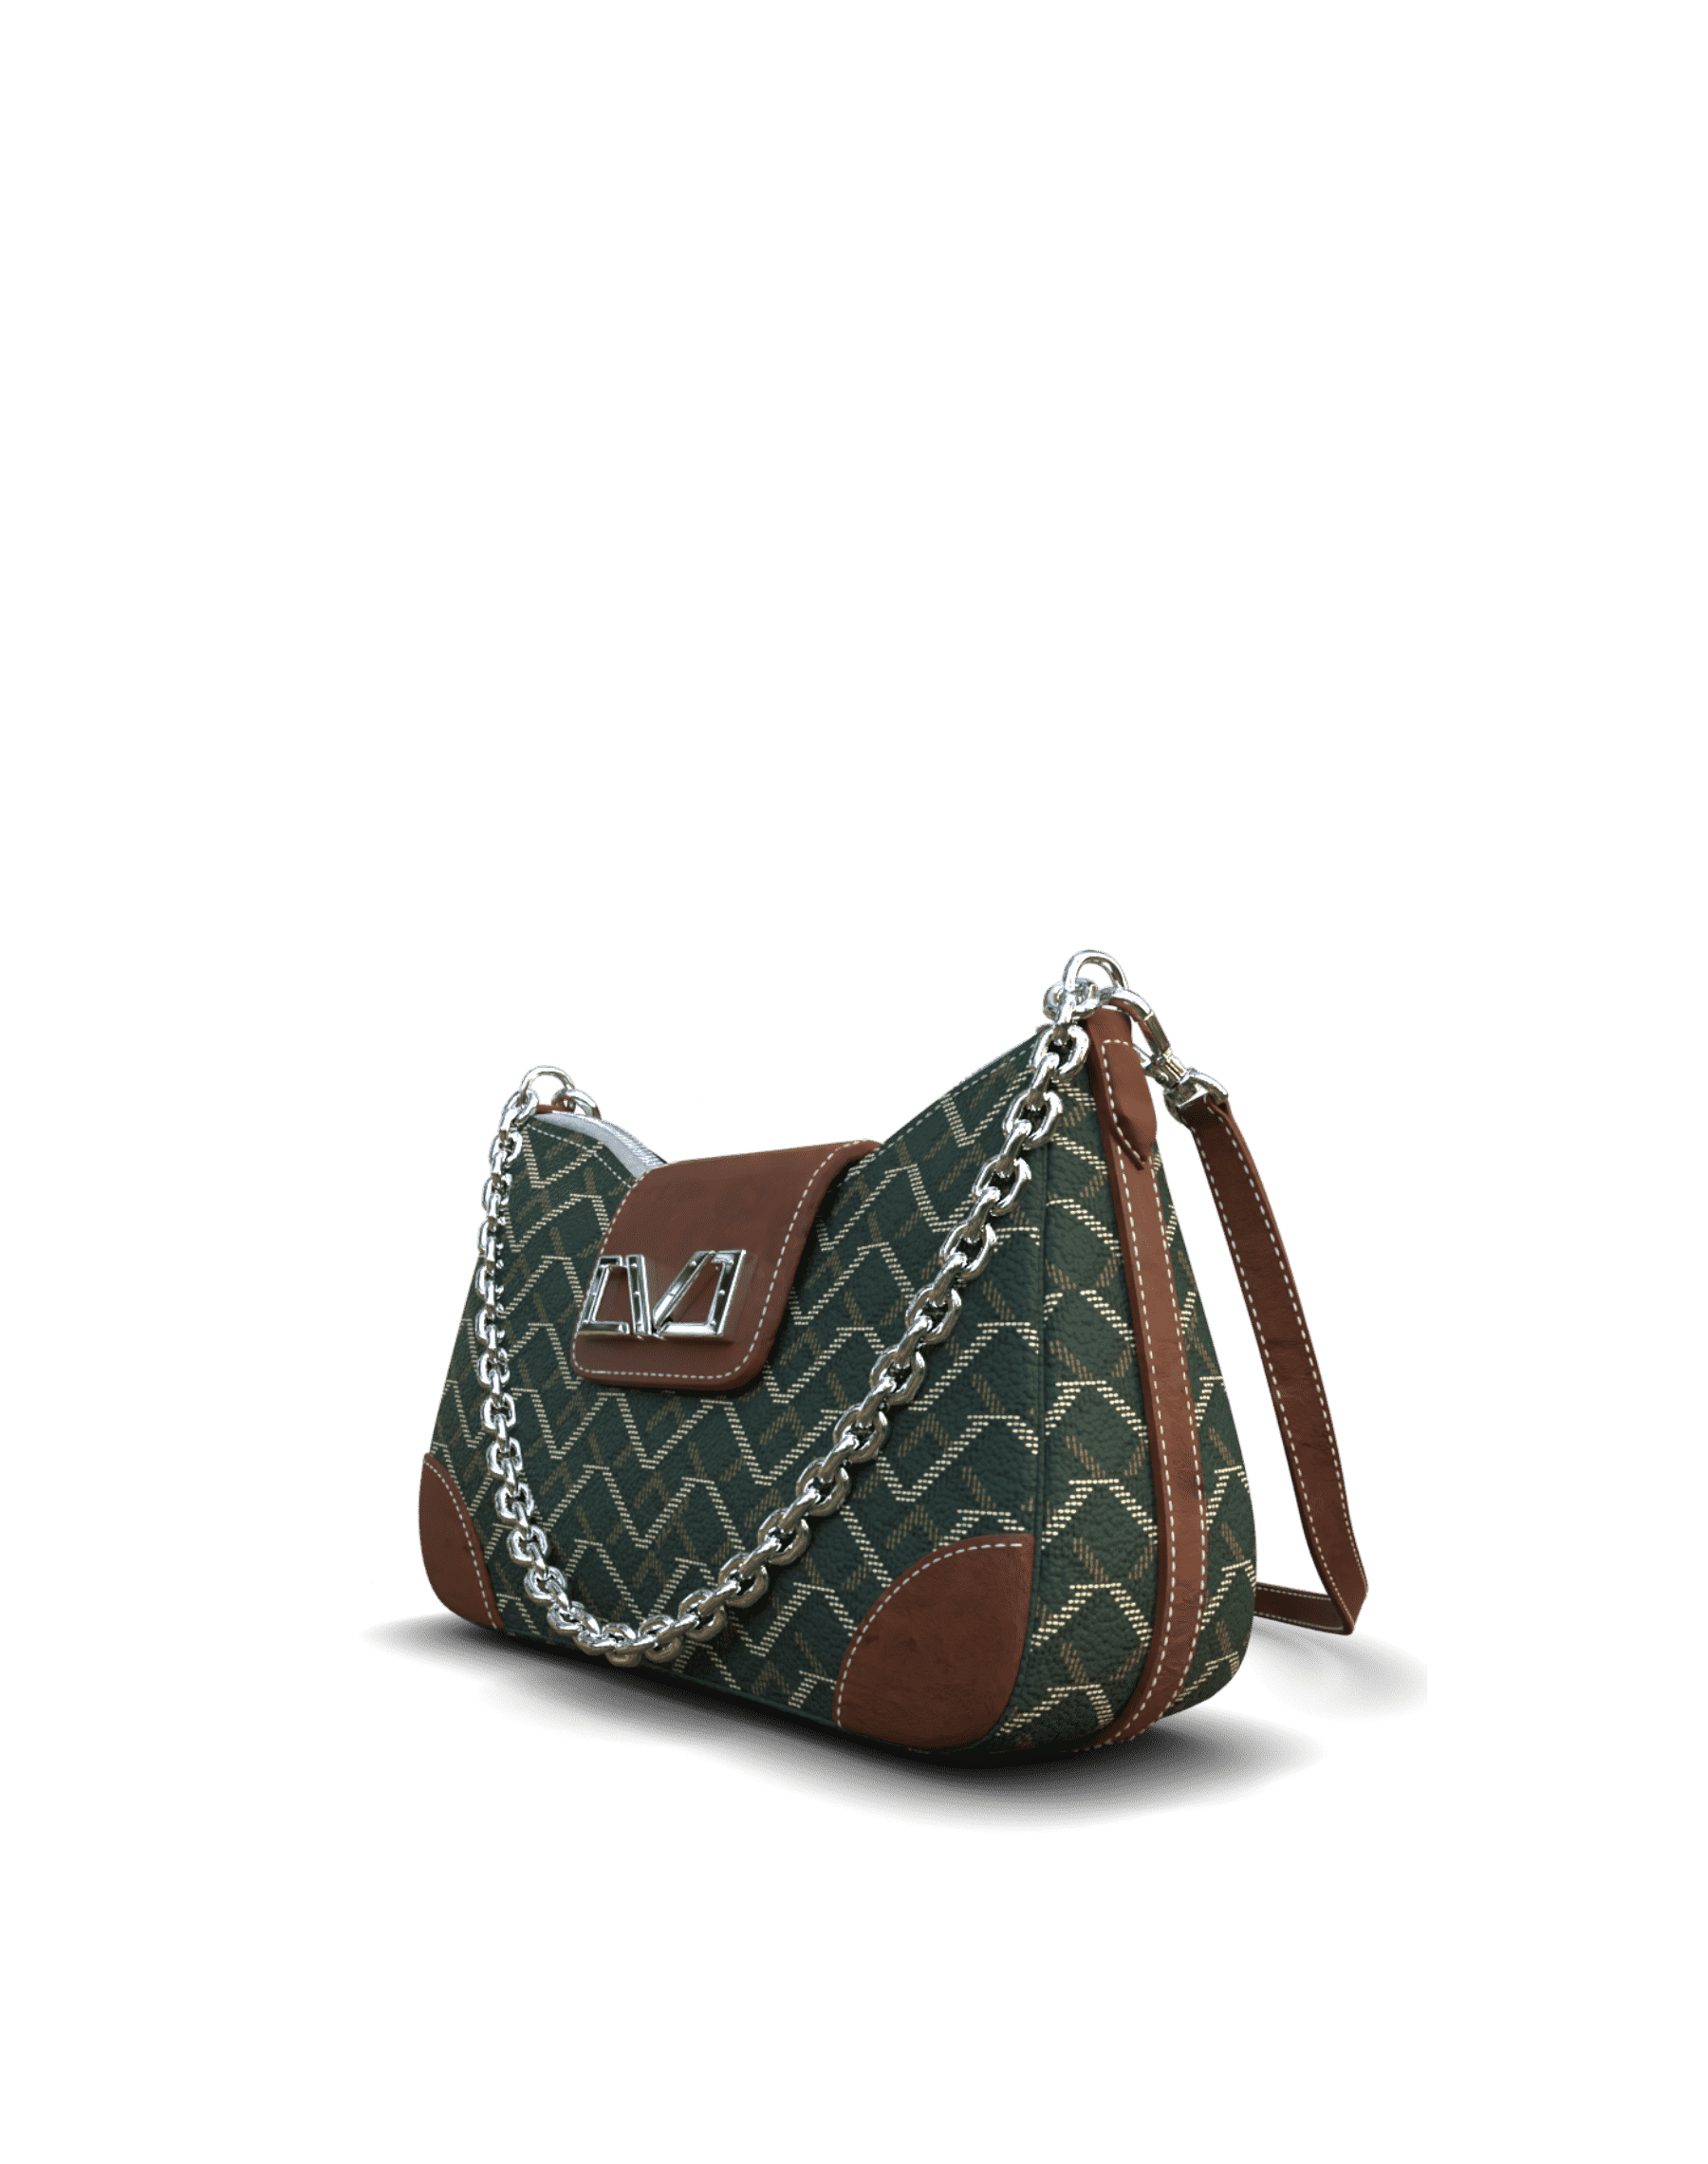 Delphi Bag image (Delphi Bag)